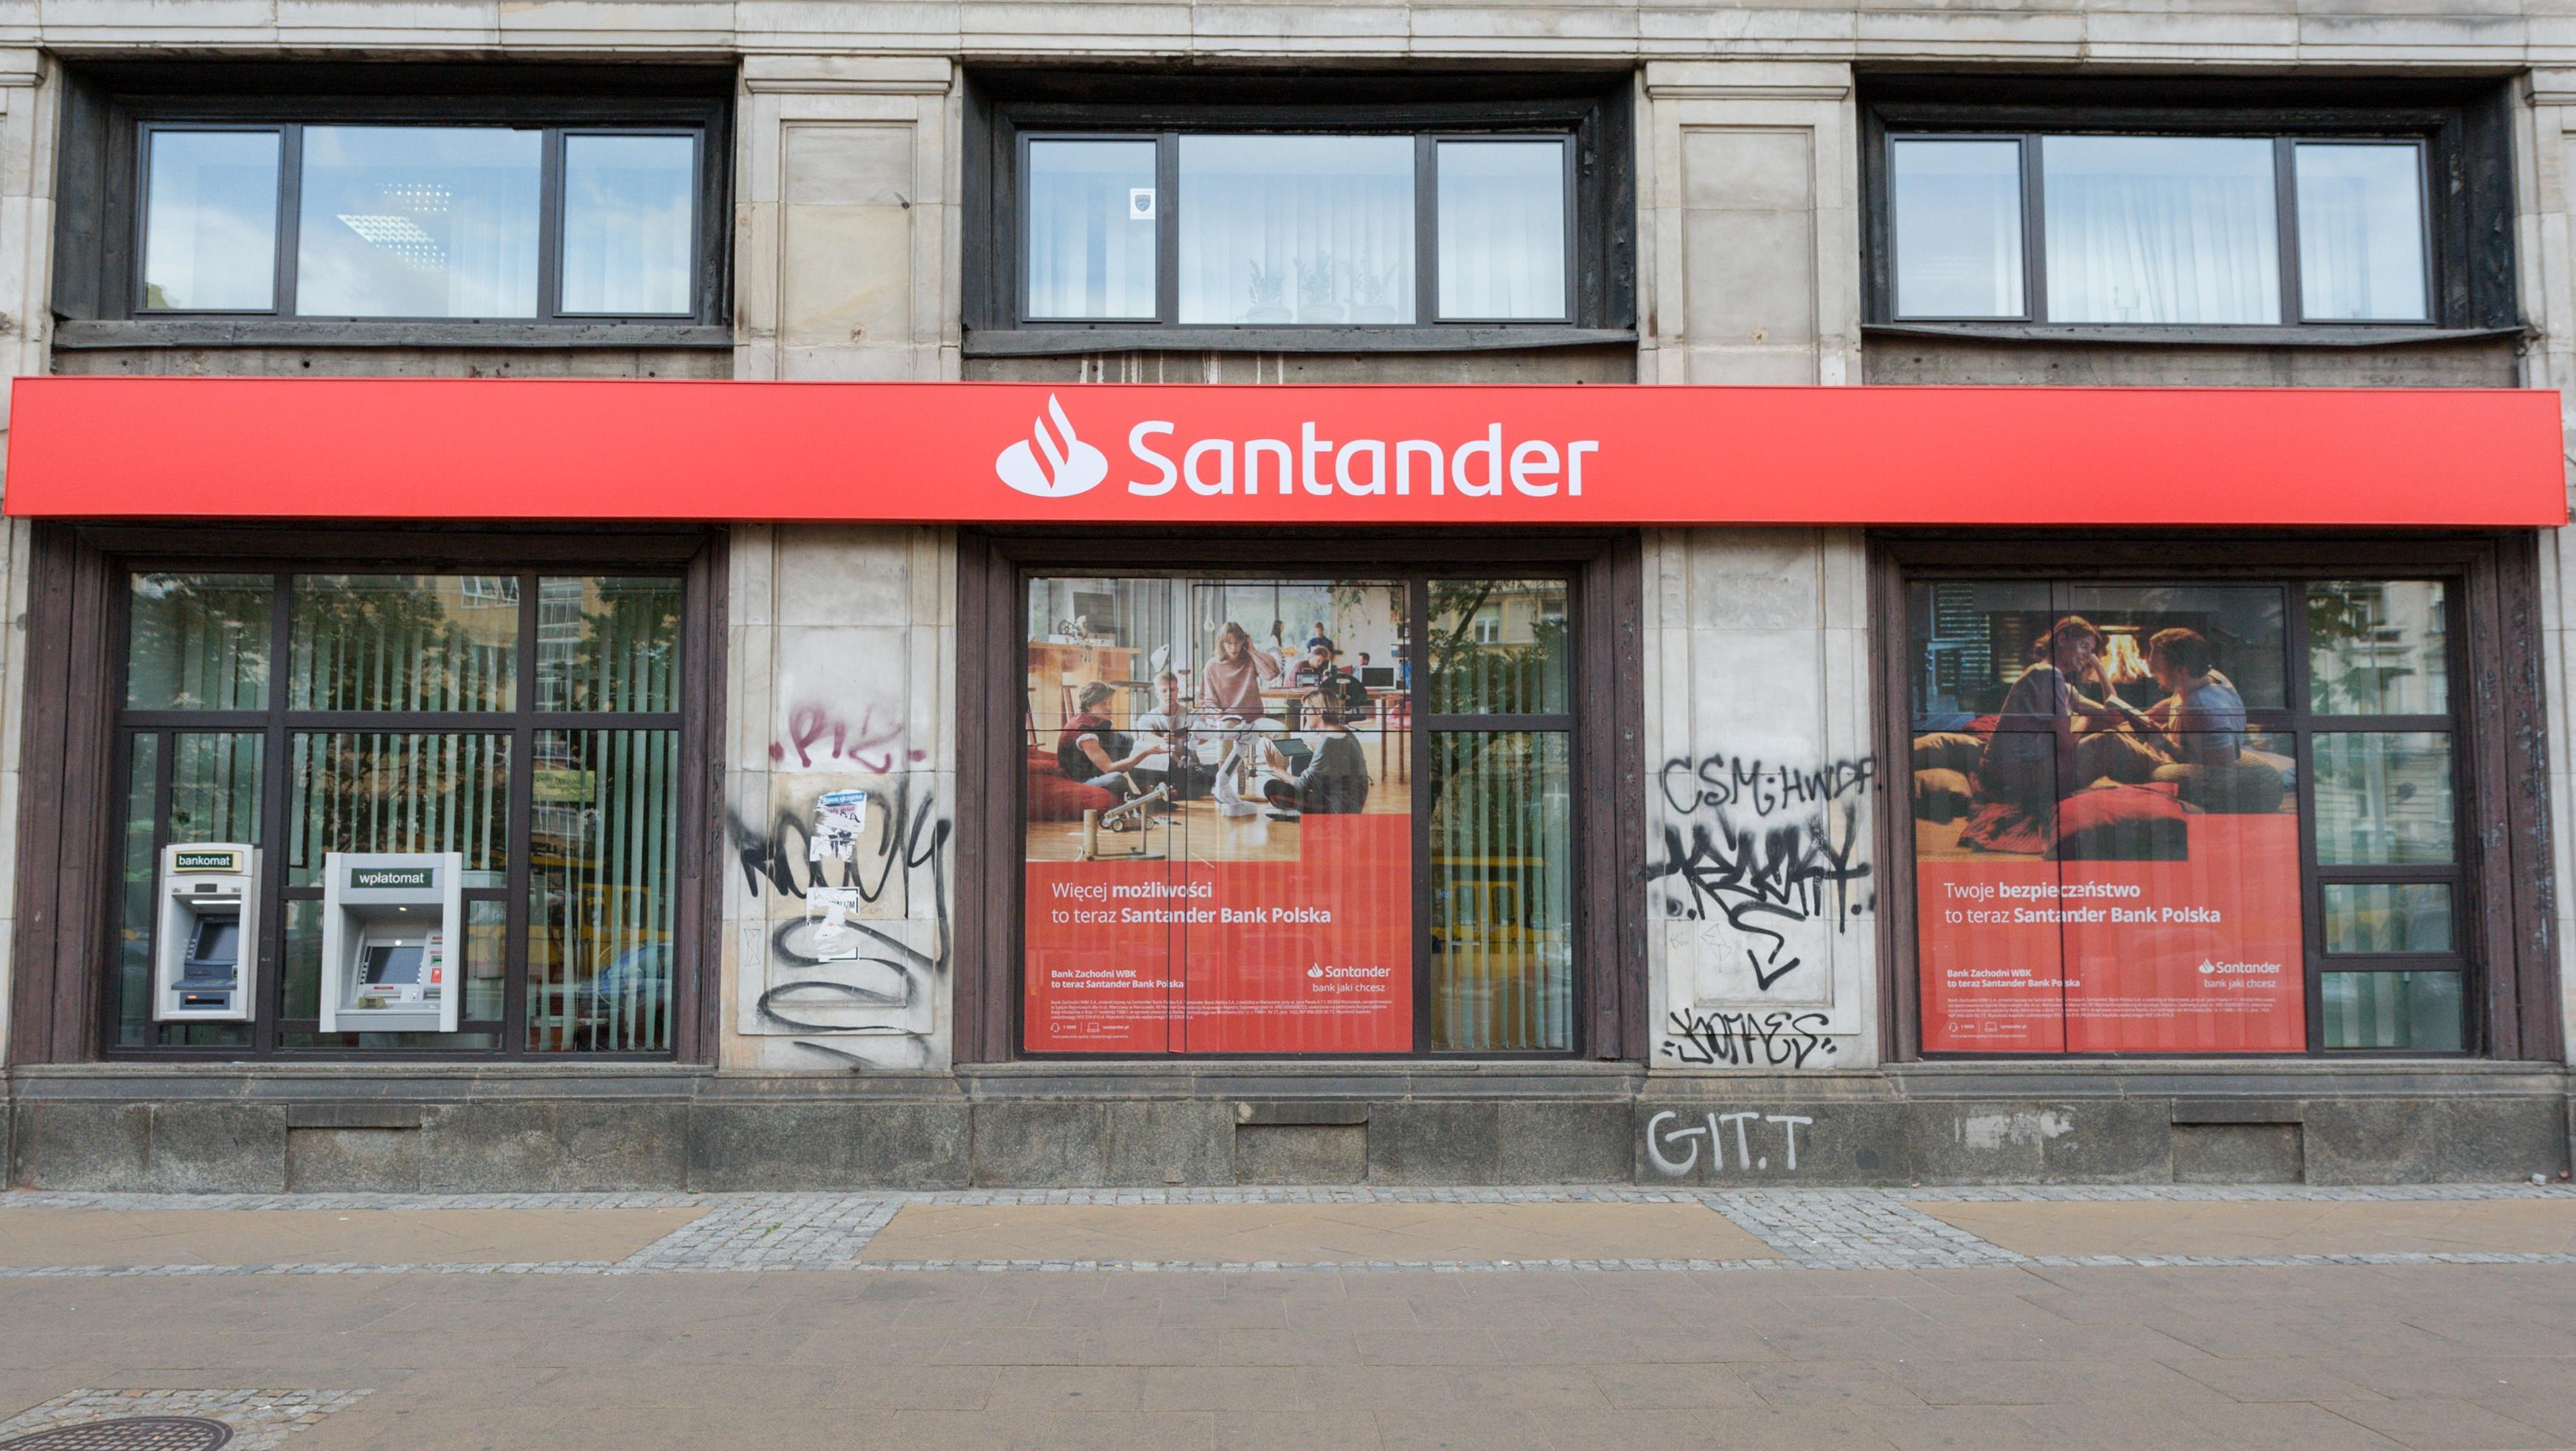 Fuzja banków: Deutsche Bank przejmuje Santander Bank Polska